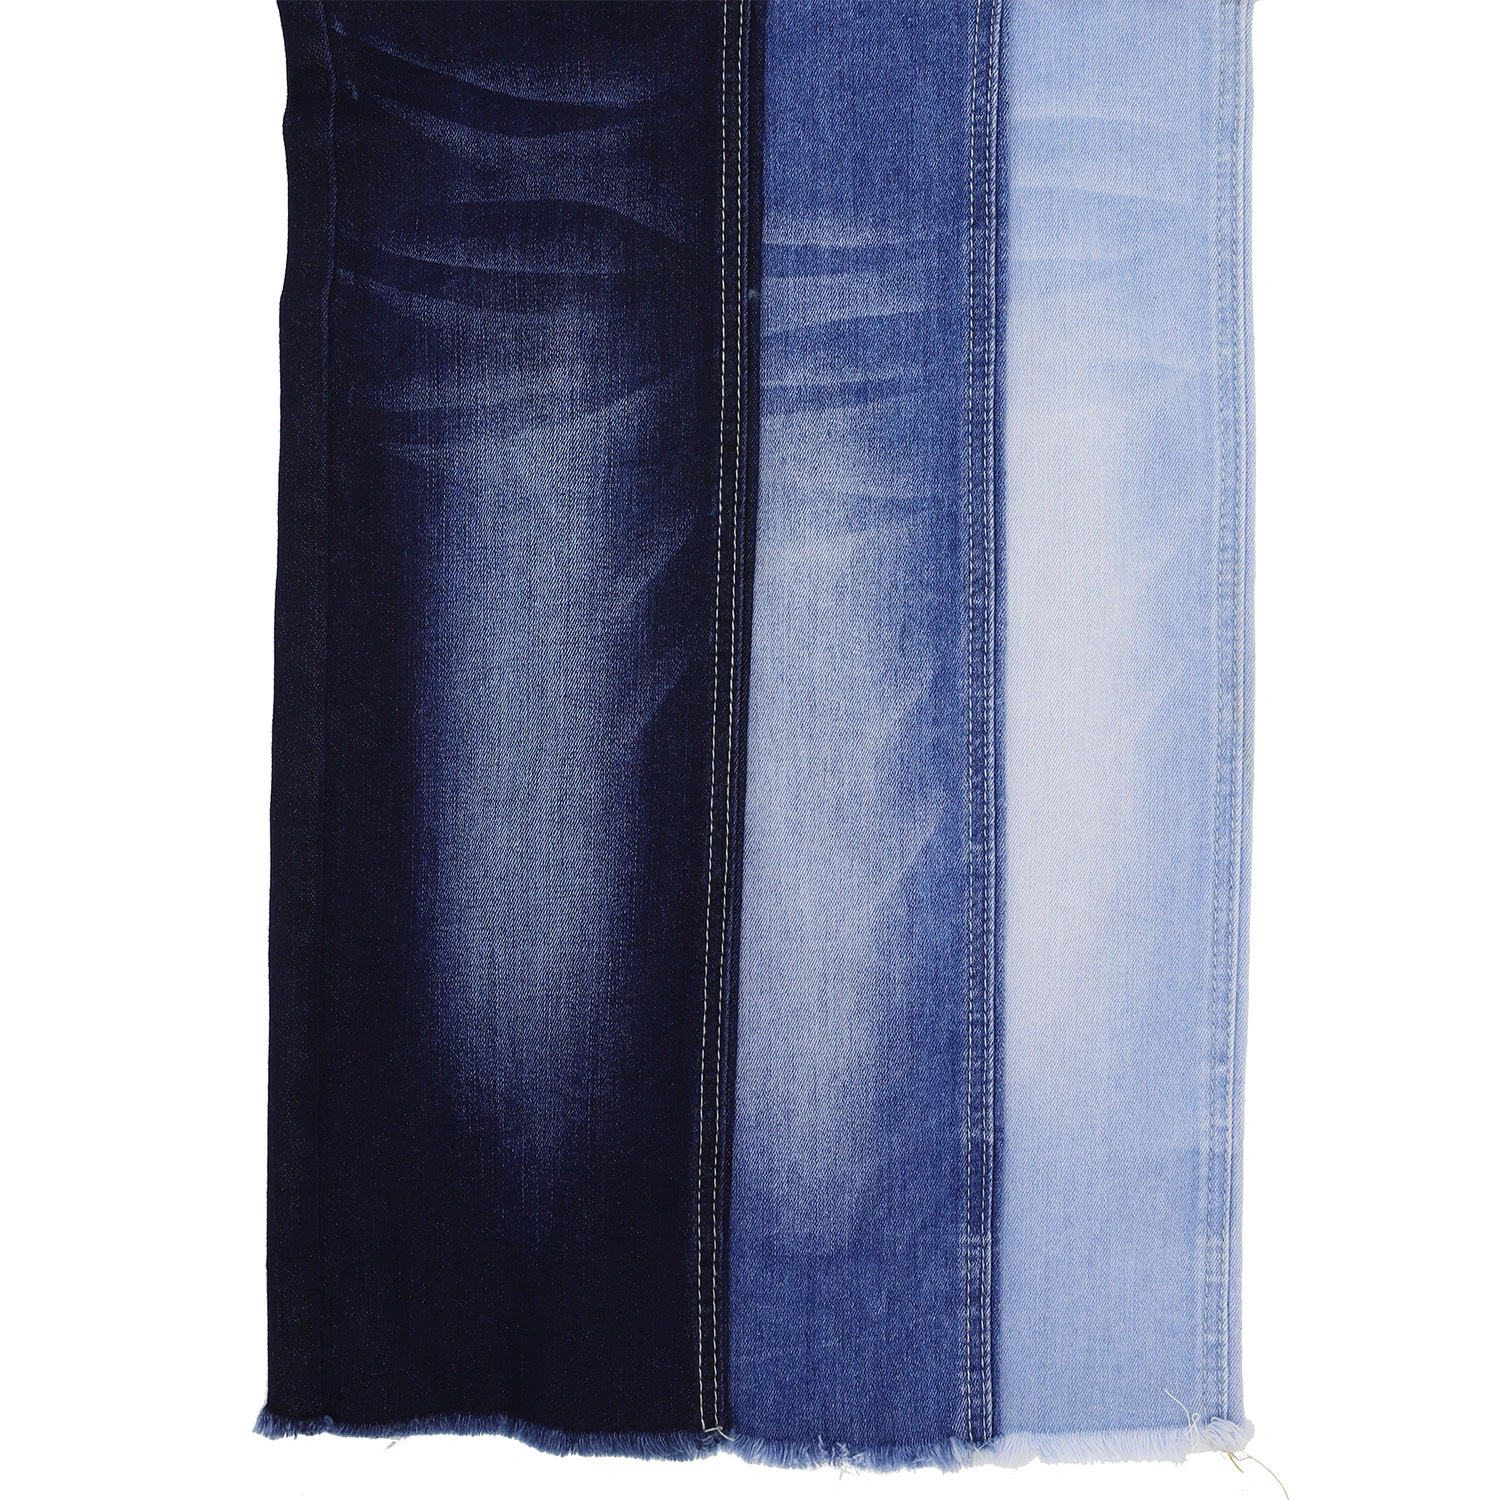 245A-3  12S OA super soft denim fabric with stretch &slub 67%Cotton  28%Poly 3%Viscose 2%Spandex 2